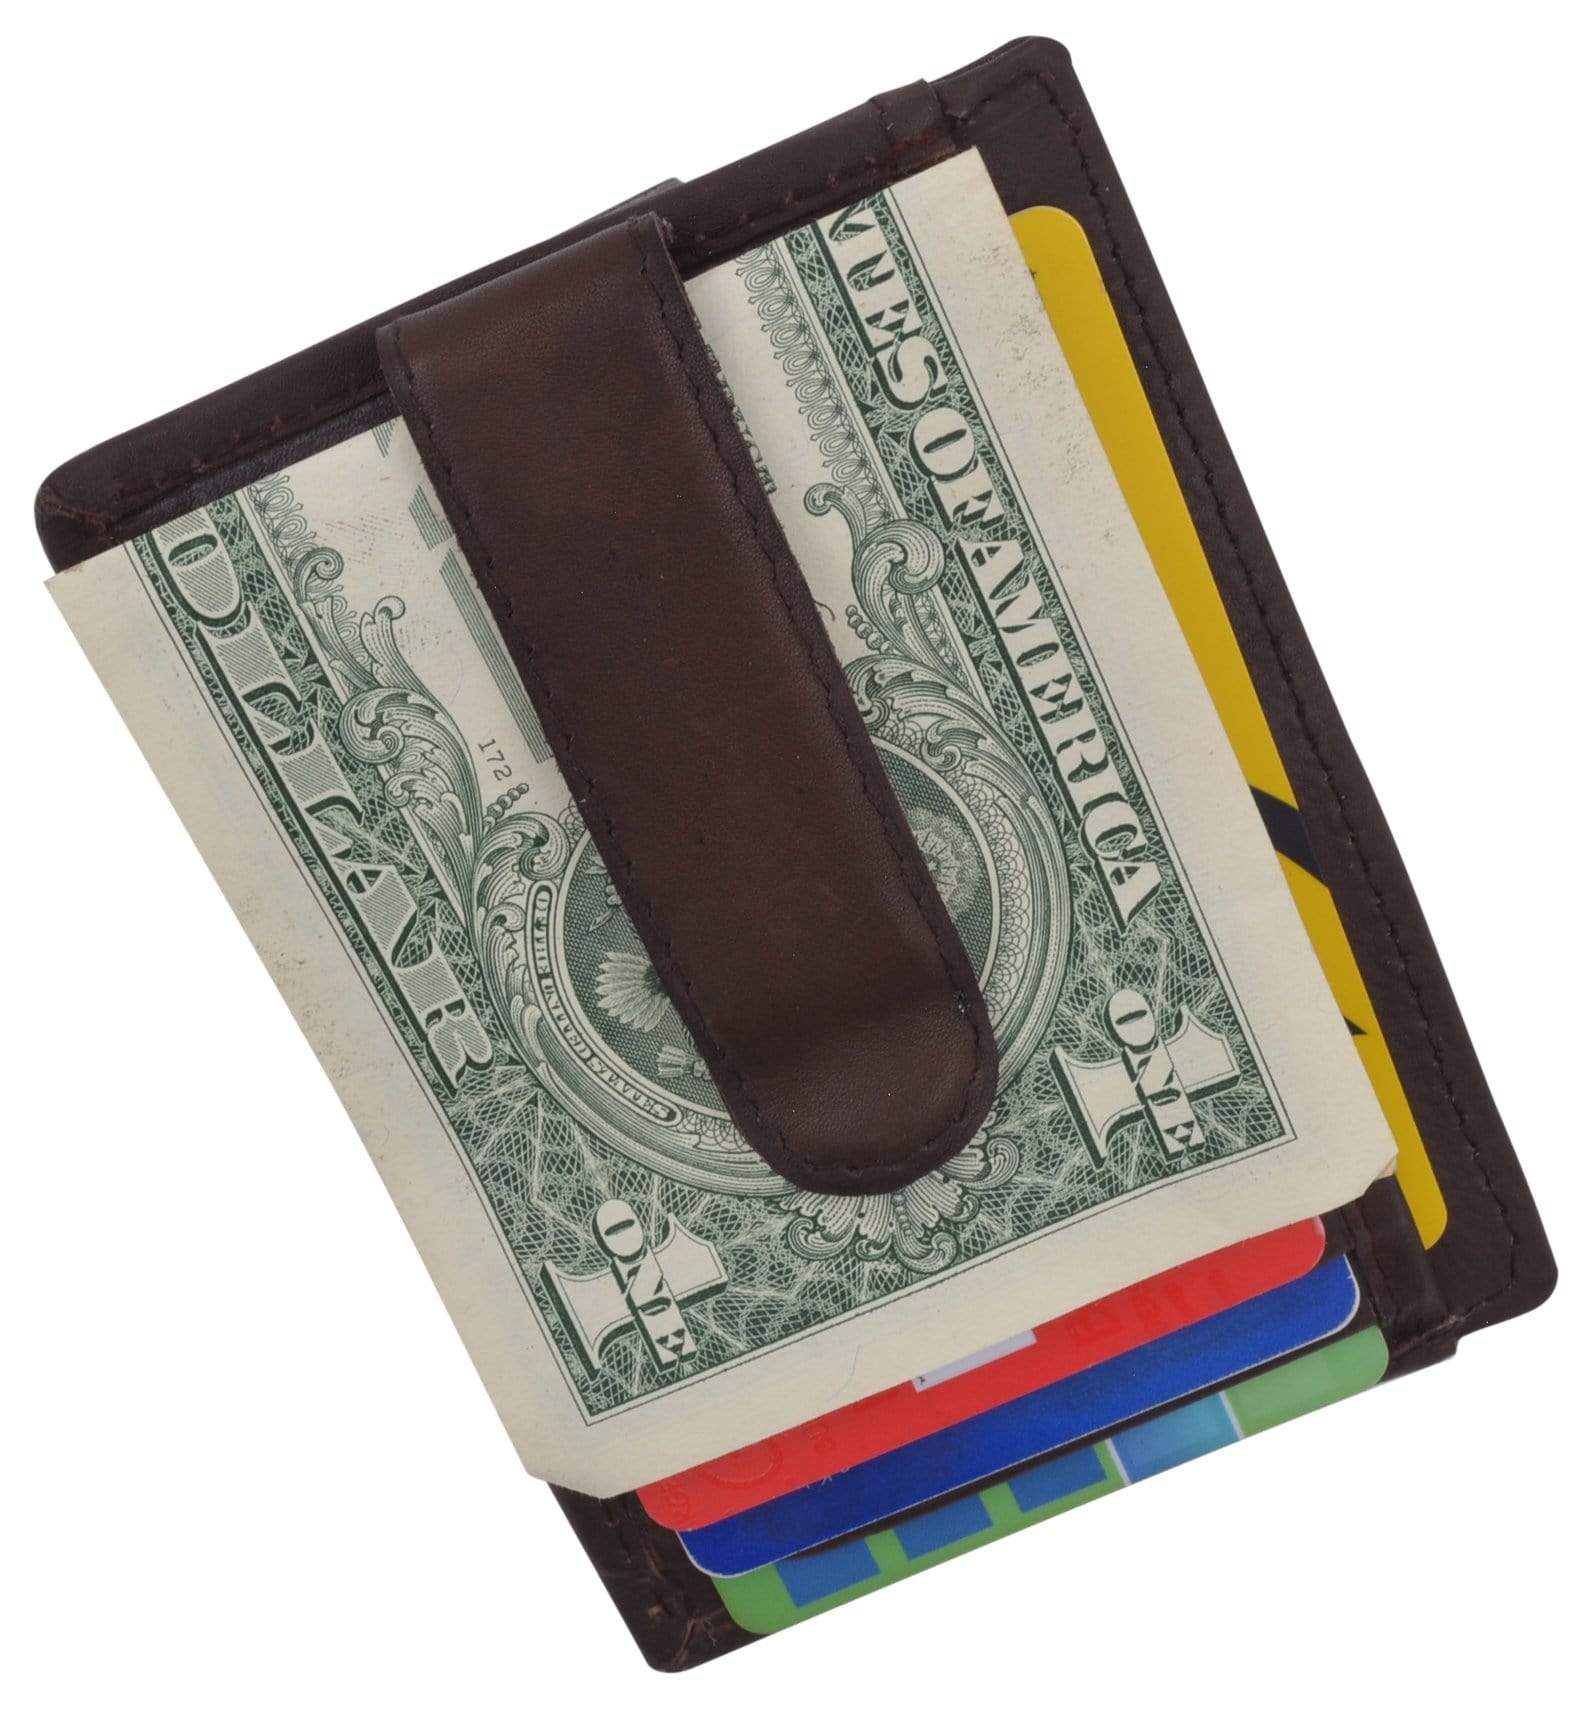 Marshal Wallet Slim Credit Card Holder Money Clip Wallet